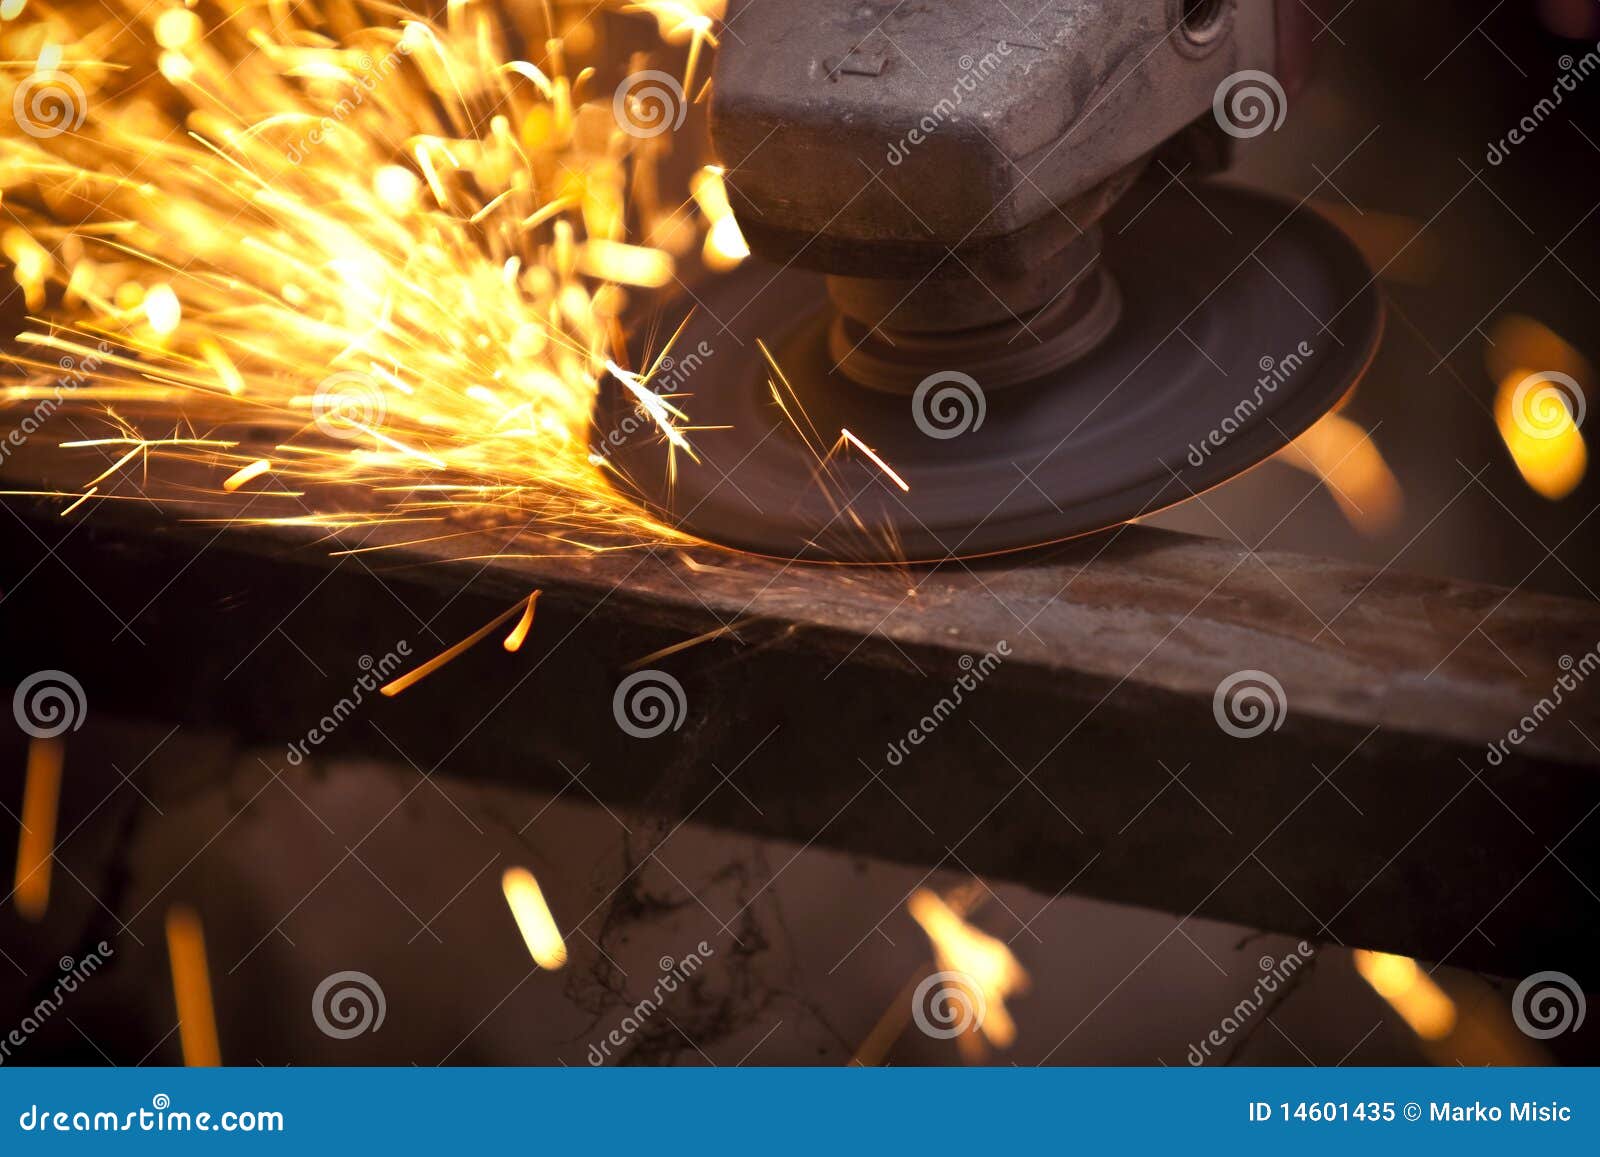 metal grinding machine